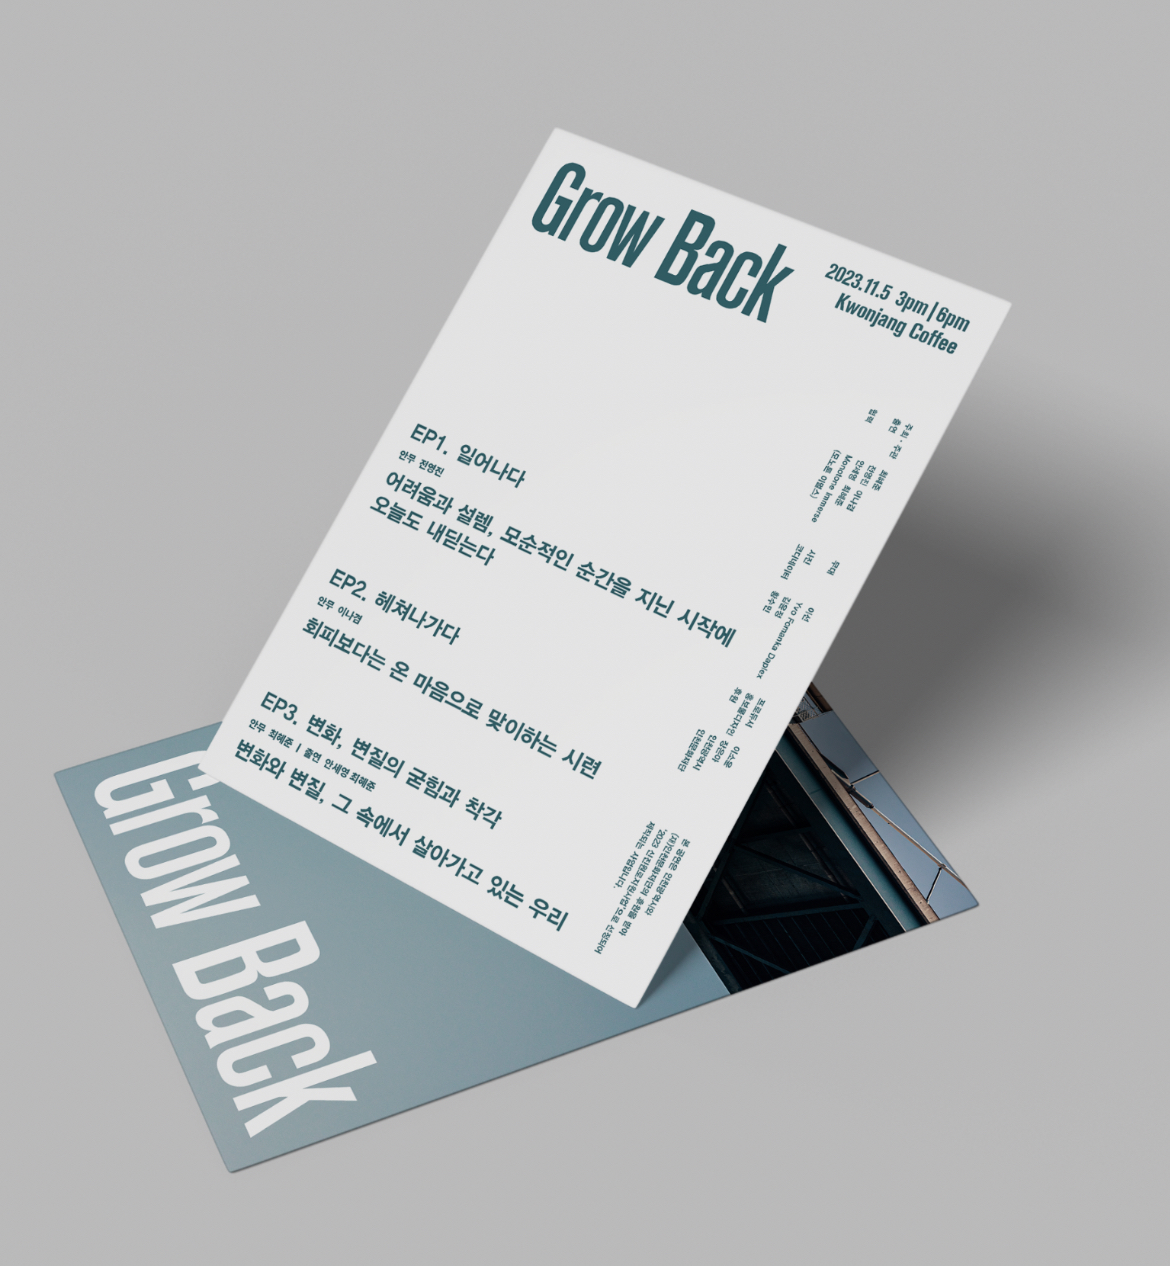 growback card